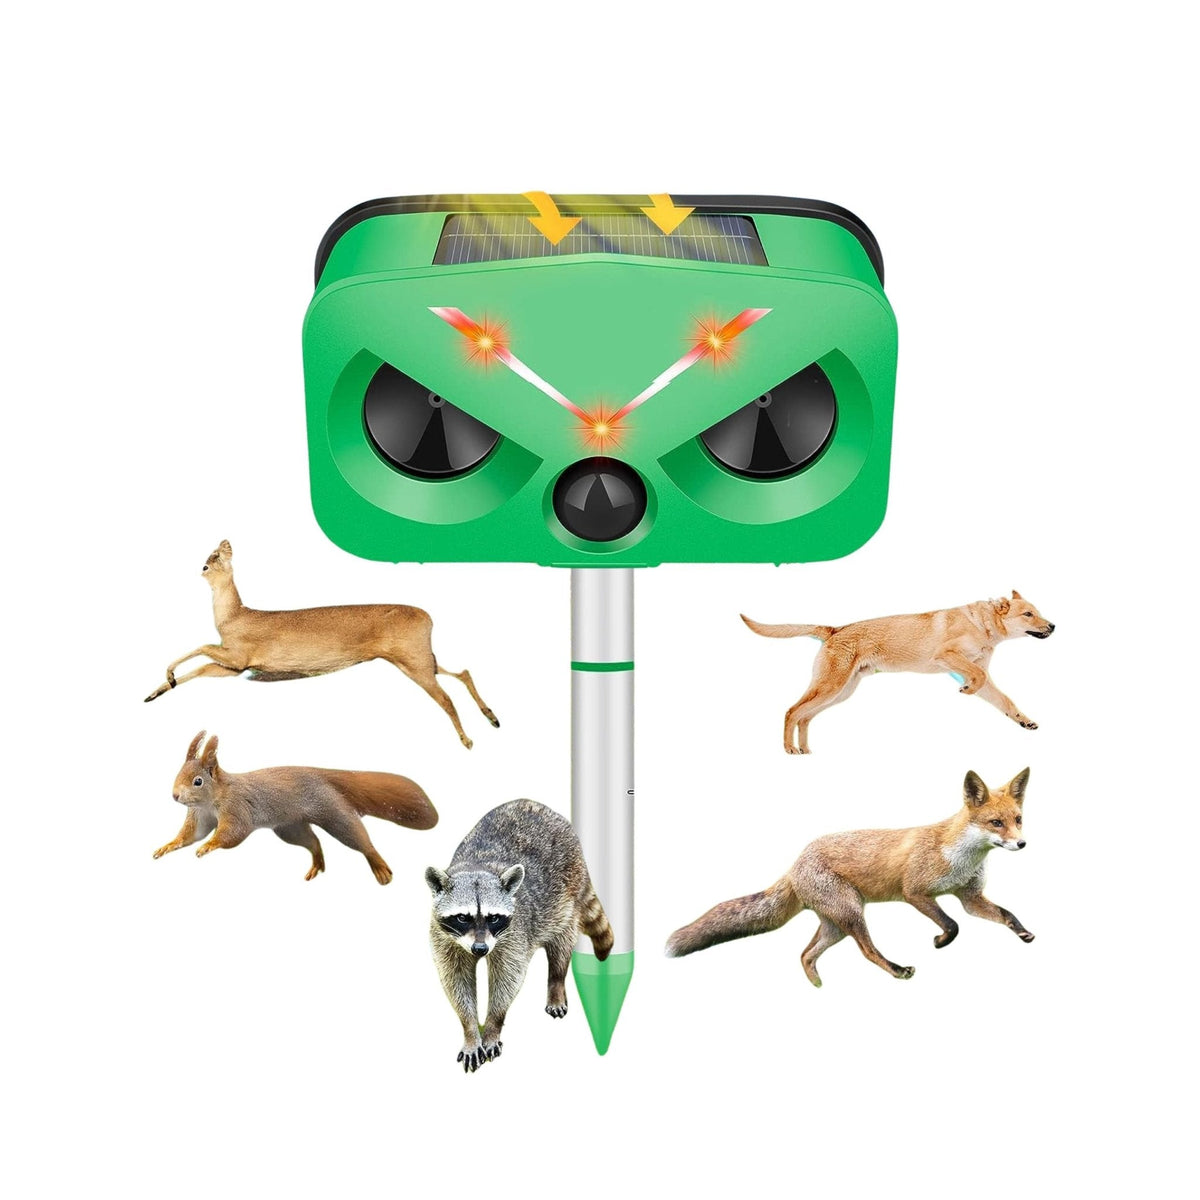 Ultrasonic Pest Repeller,Solar Powered Animal Repeller with